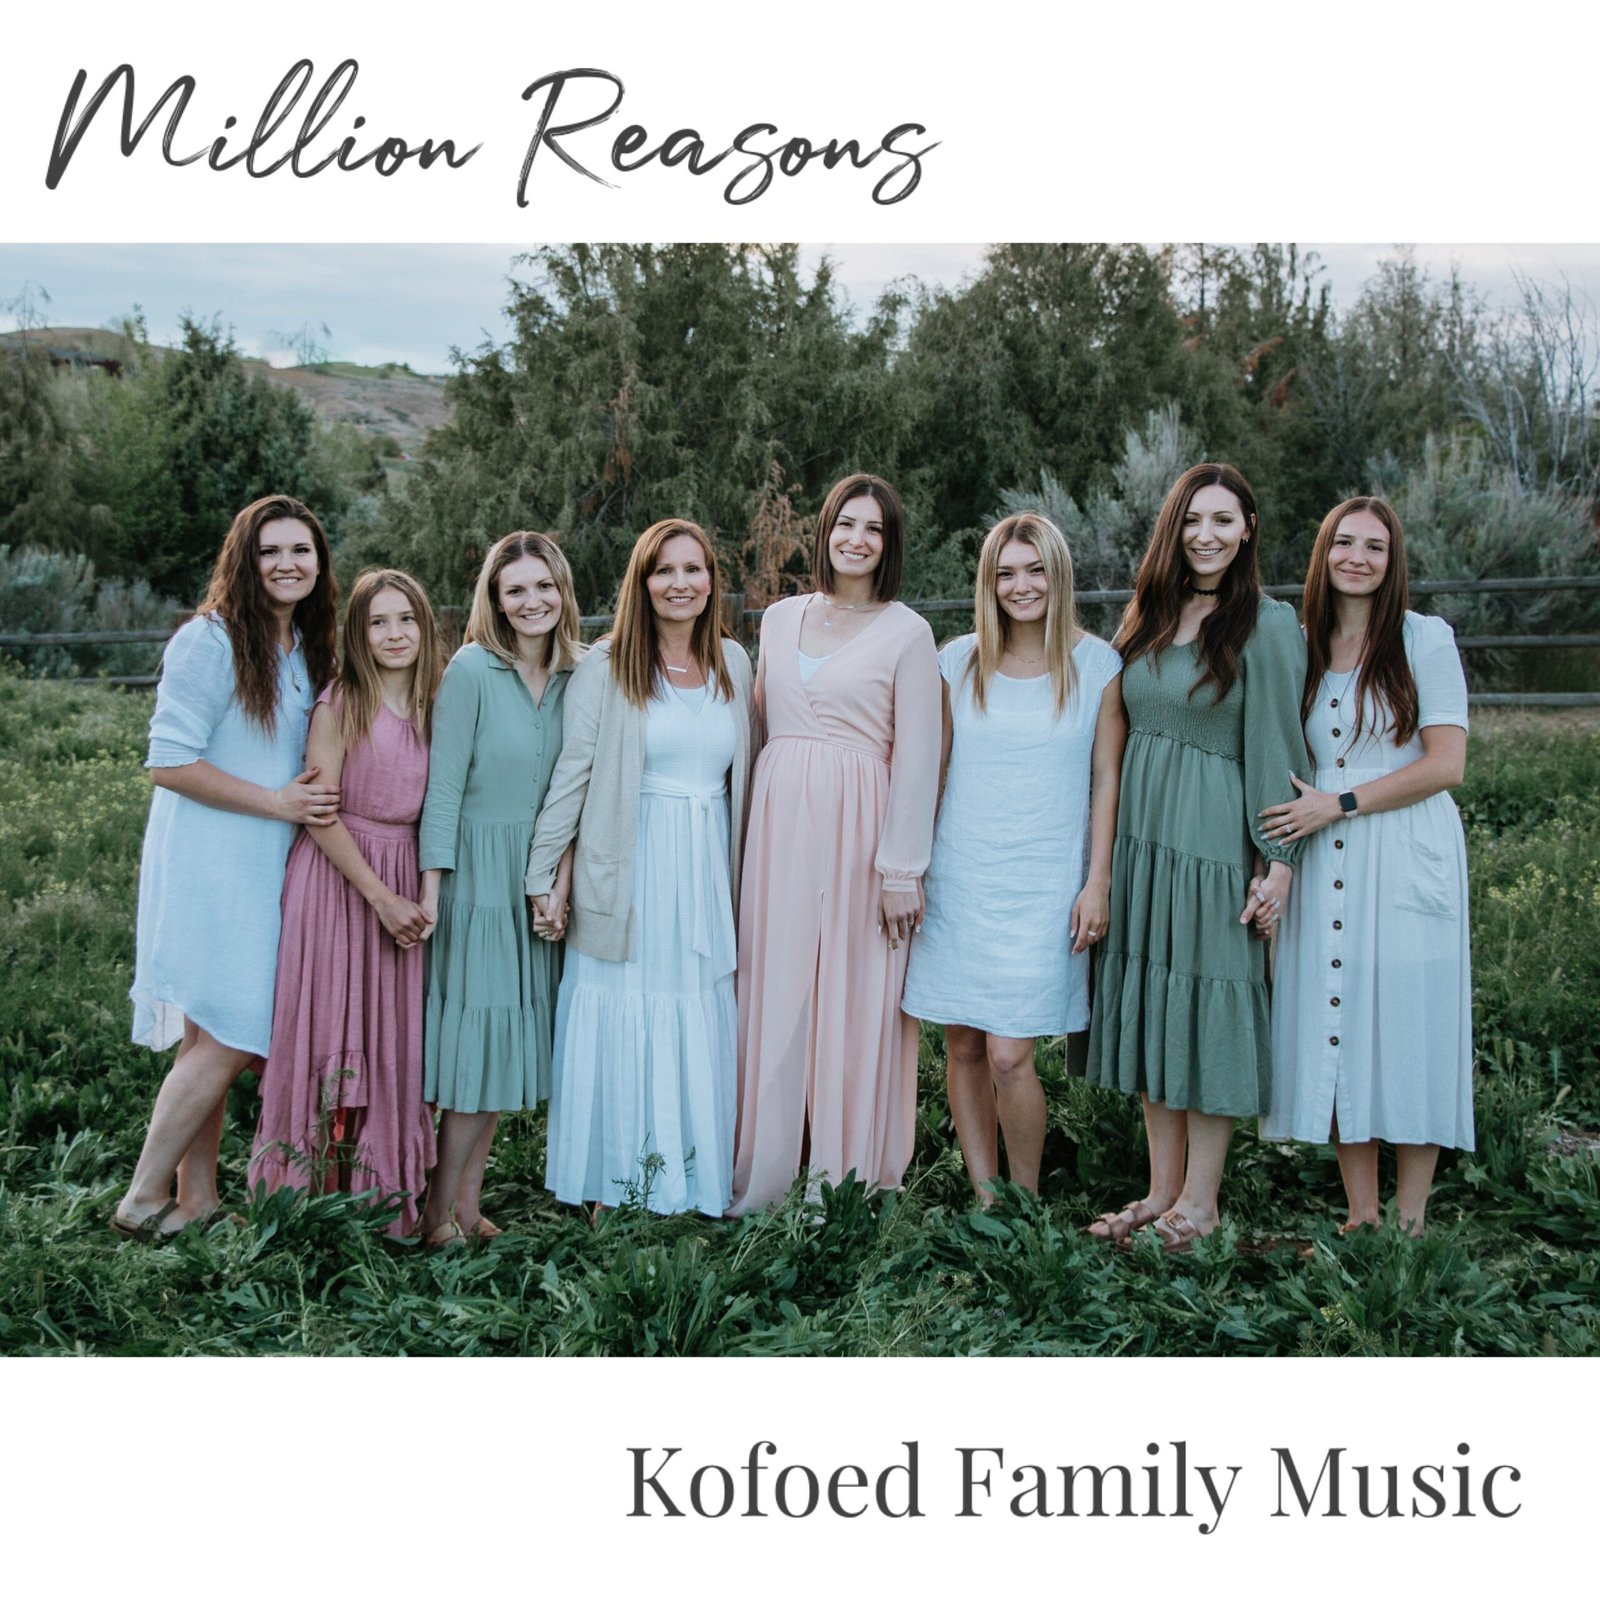 million-reasons-cover-girls-kofoed-family-music